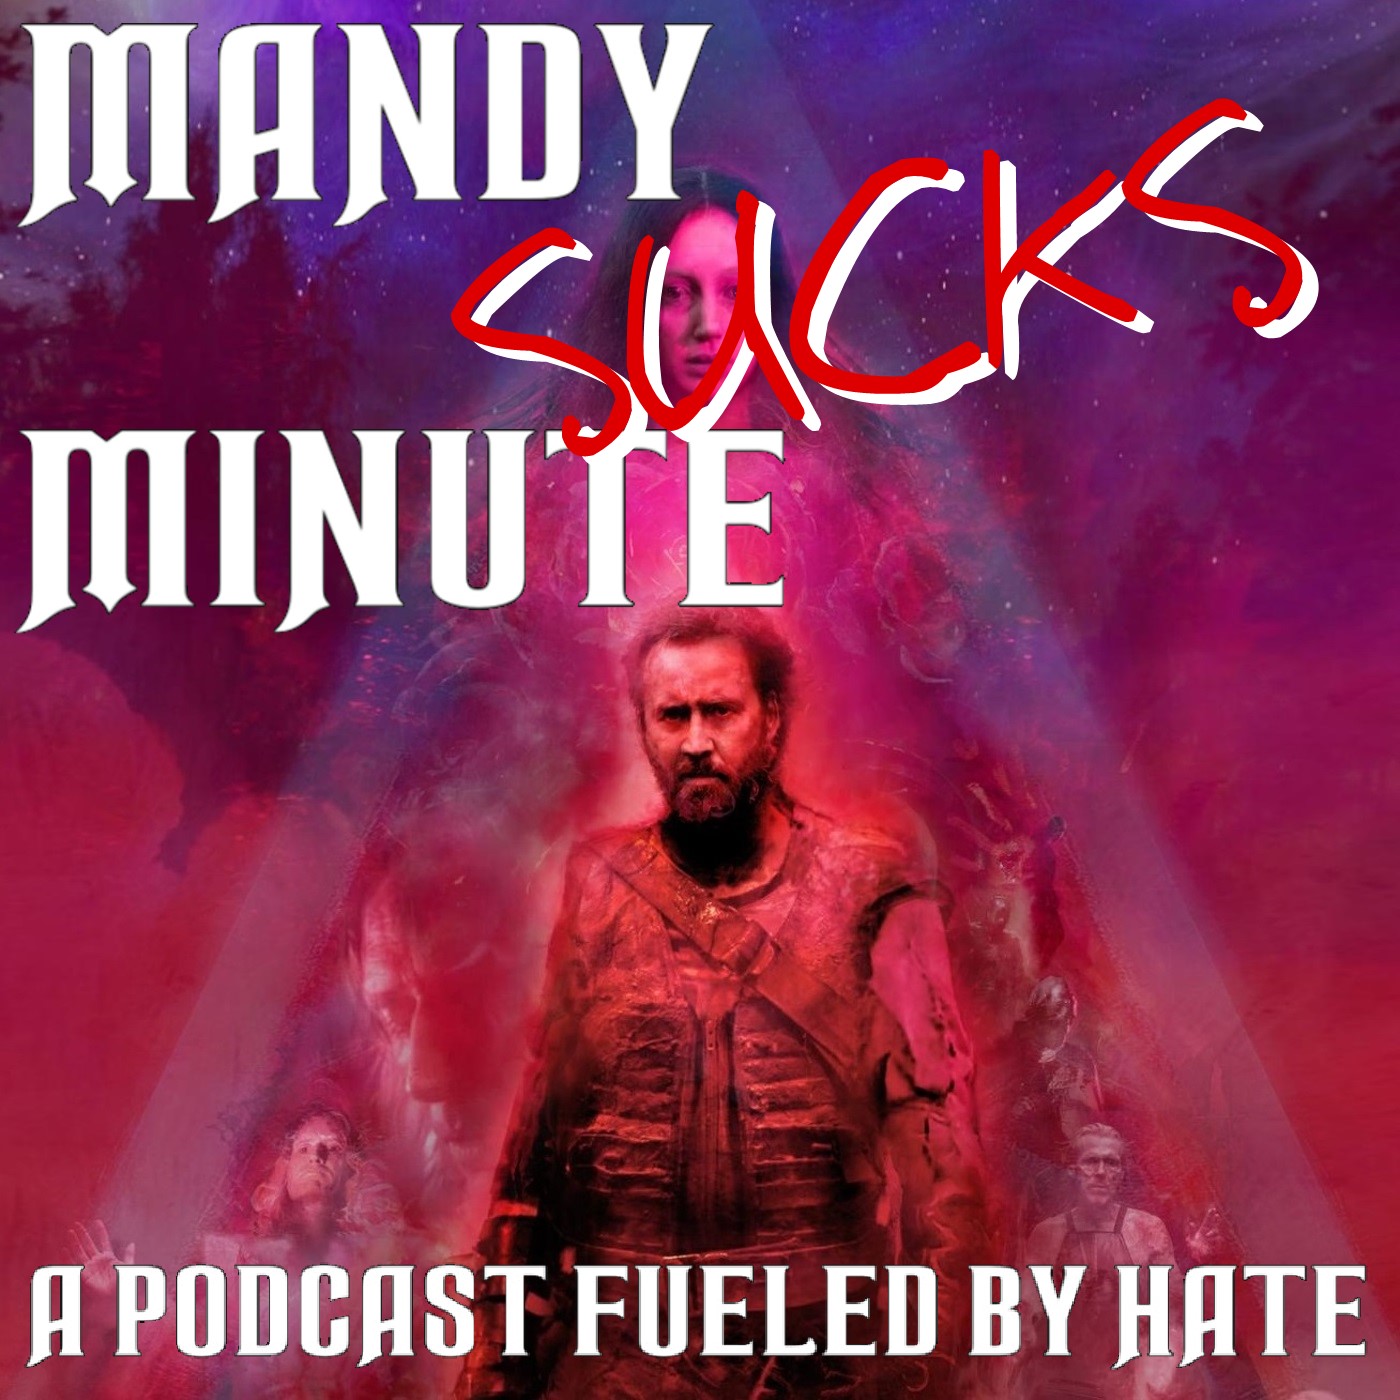 mandy sucks minute podcast